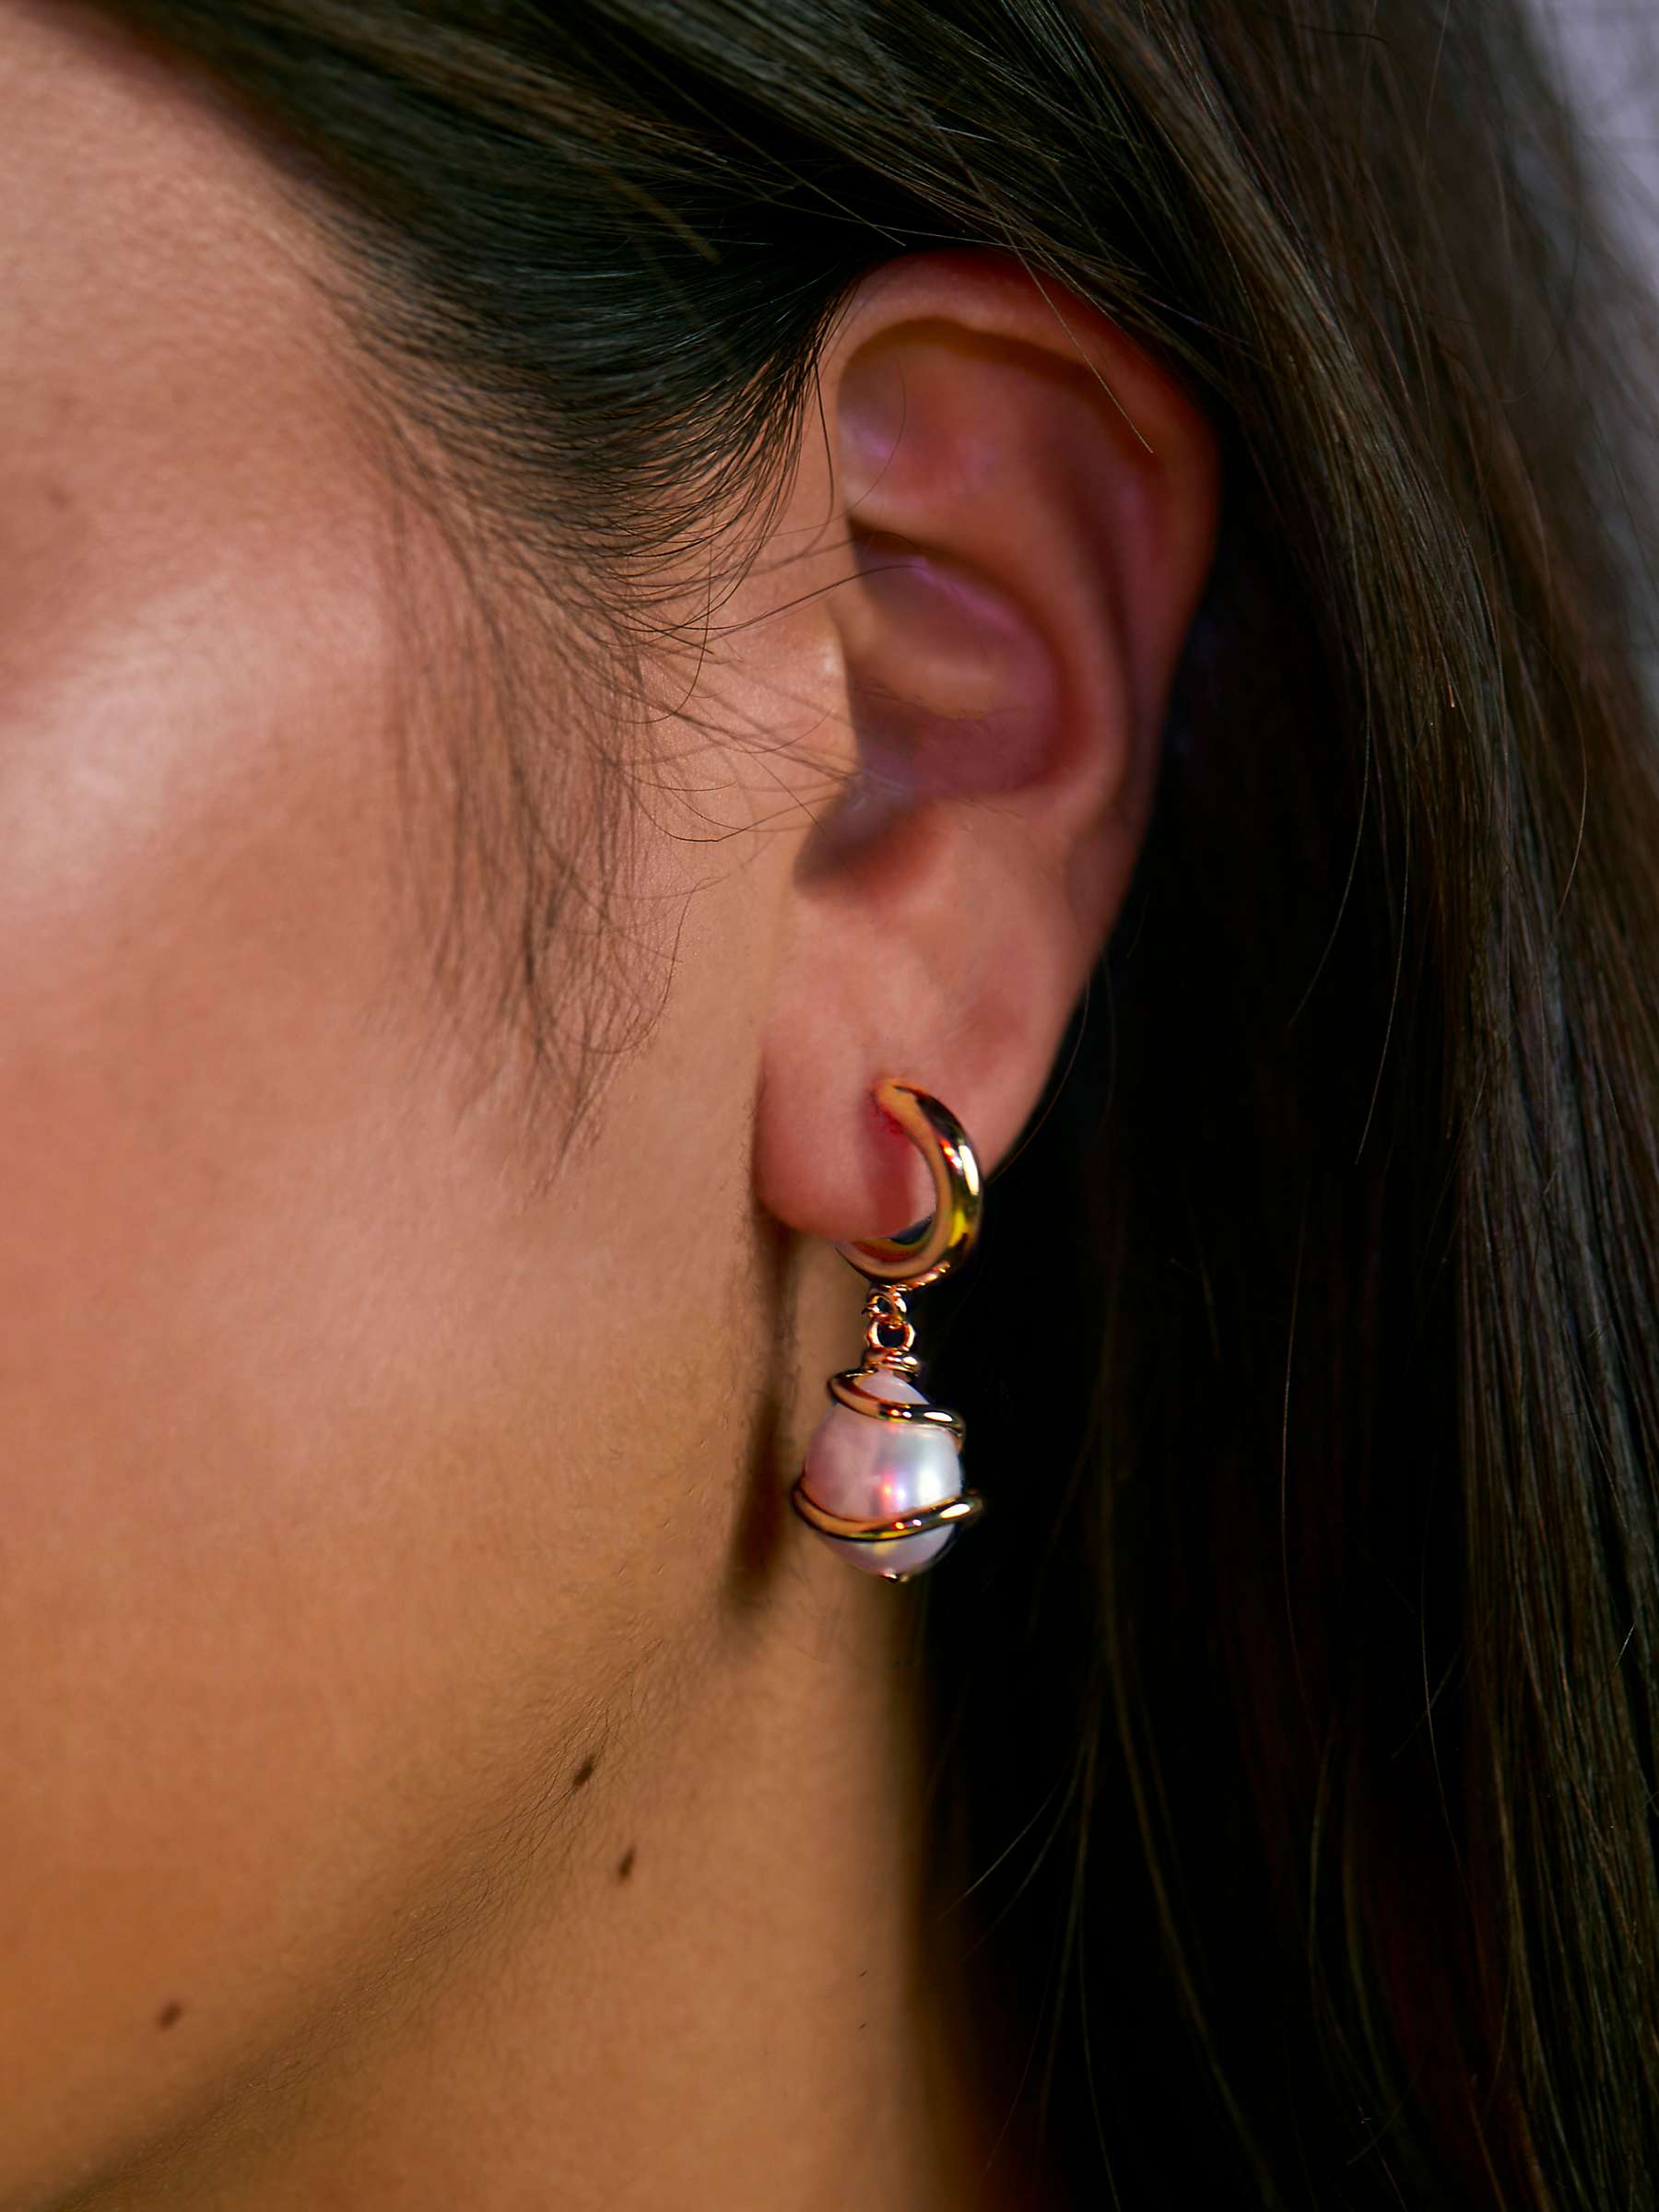 Estella Bartlett Pearl Wrap Hoop Earrings, Gold at John Lewis & Partners